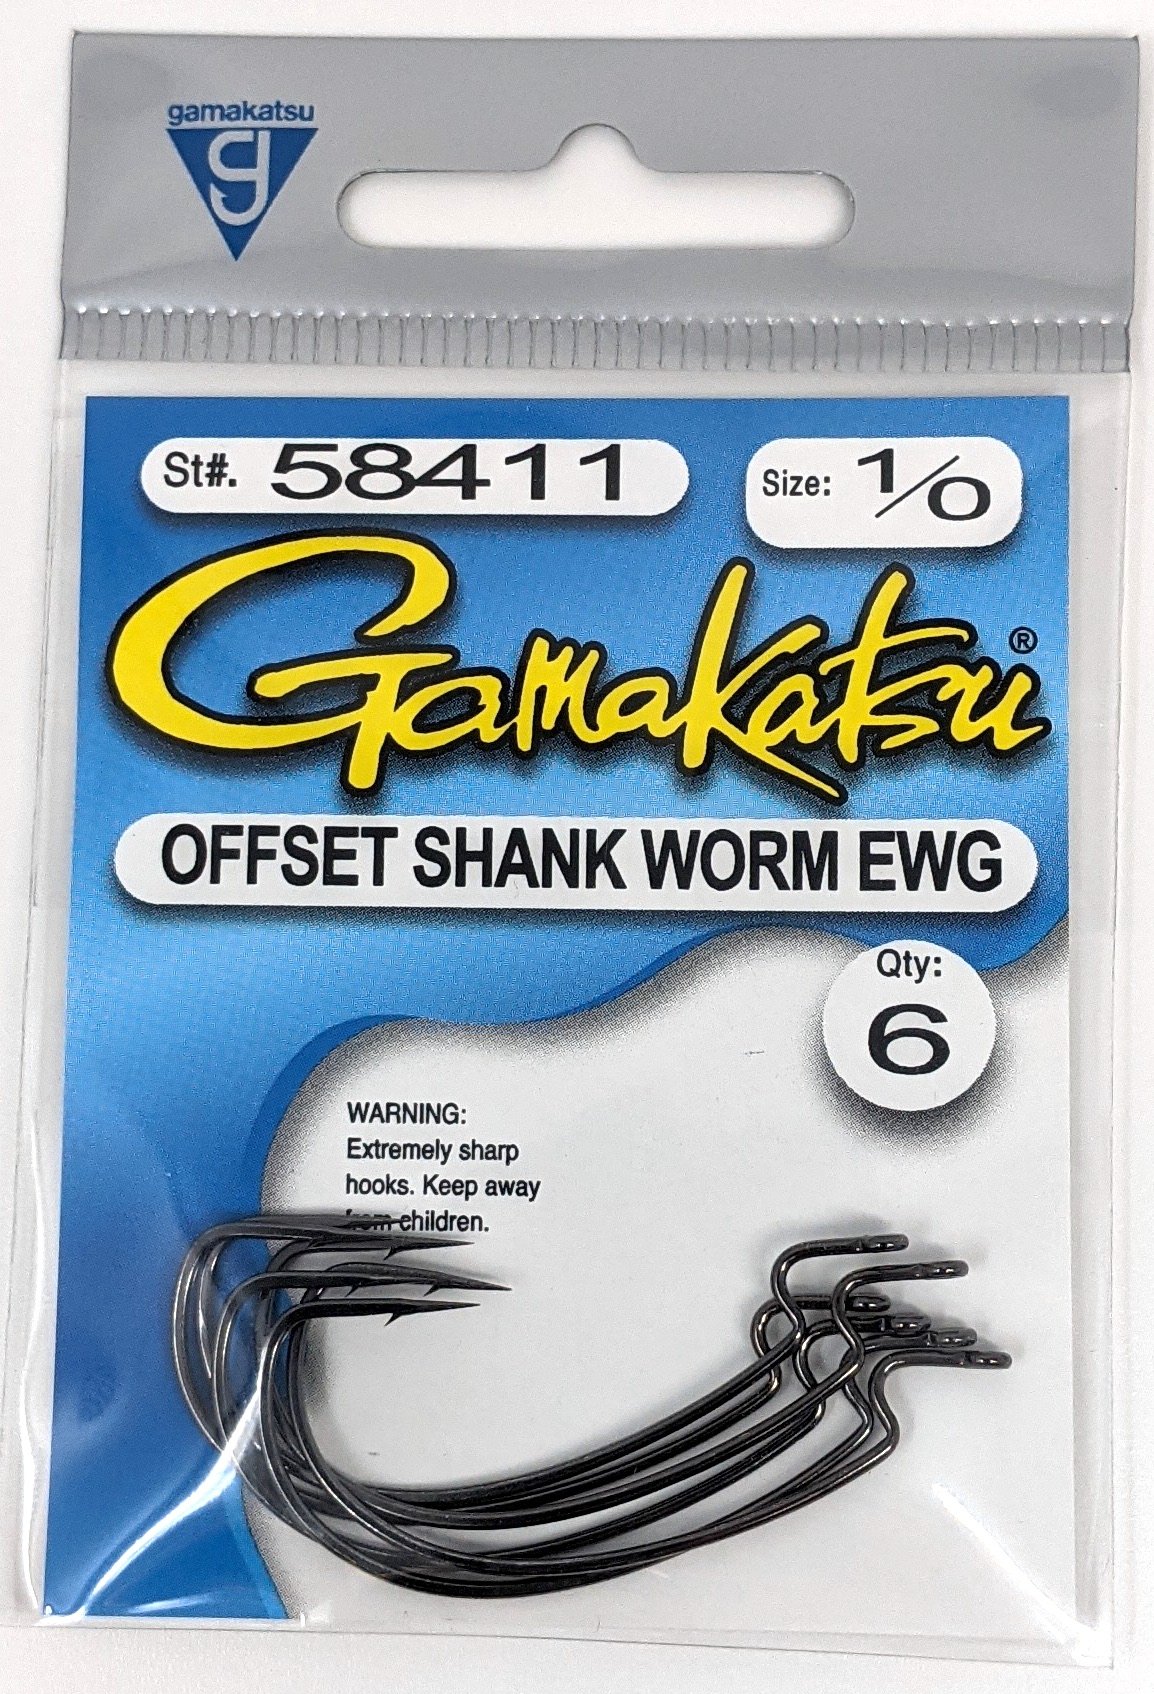 Gamakatsu Superline EWG Worm Hooks 5/0 Qty 4